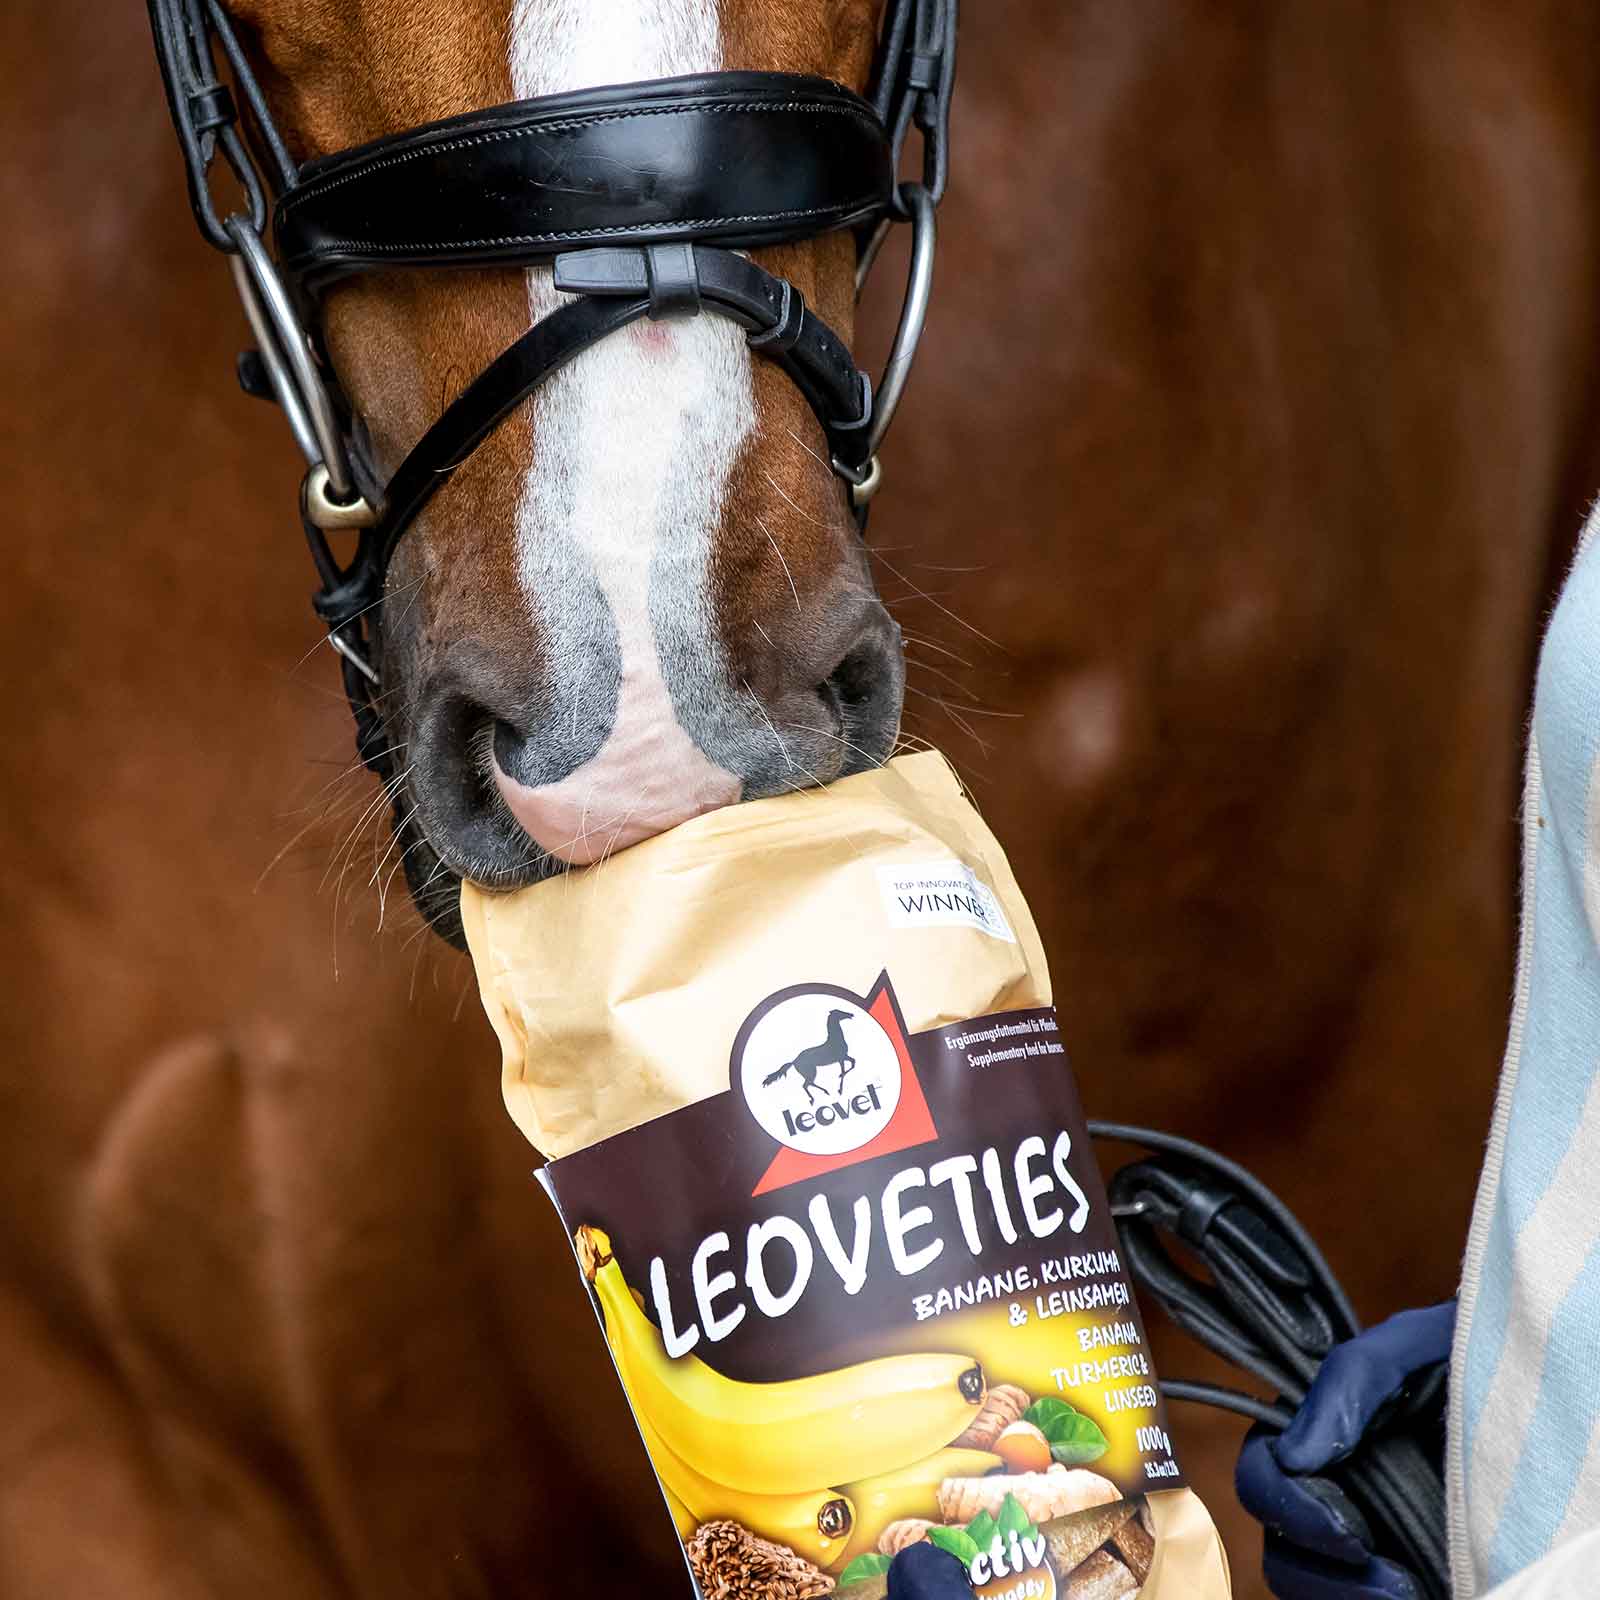 Leovet Leoveties snack pentru cai cu banane, turmeric și semințe de in 1 kg